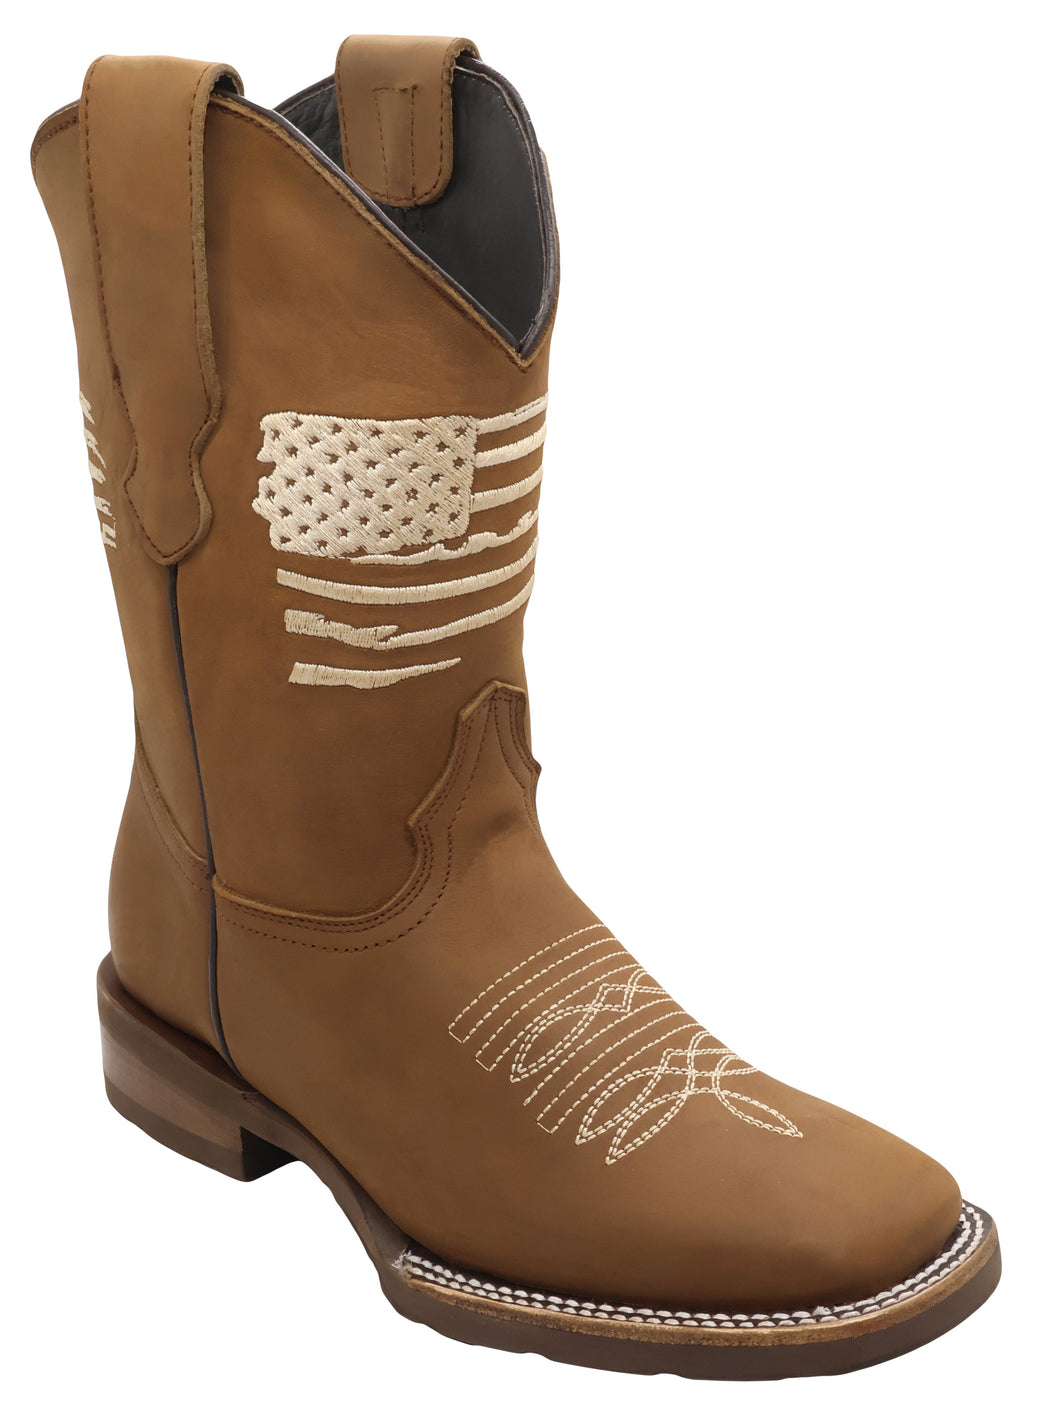 Silverton Patriot Lady All Leather Wide Square Toe Boots (Tobacco)